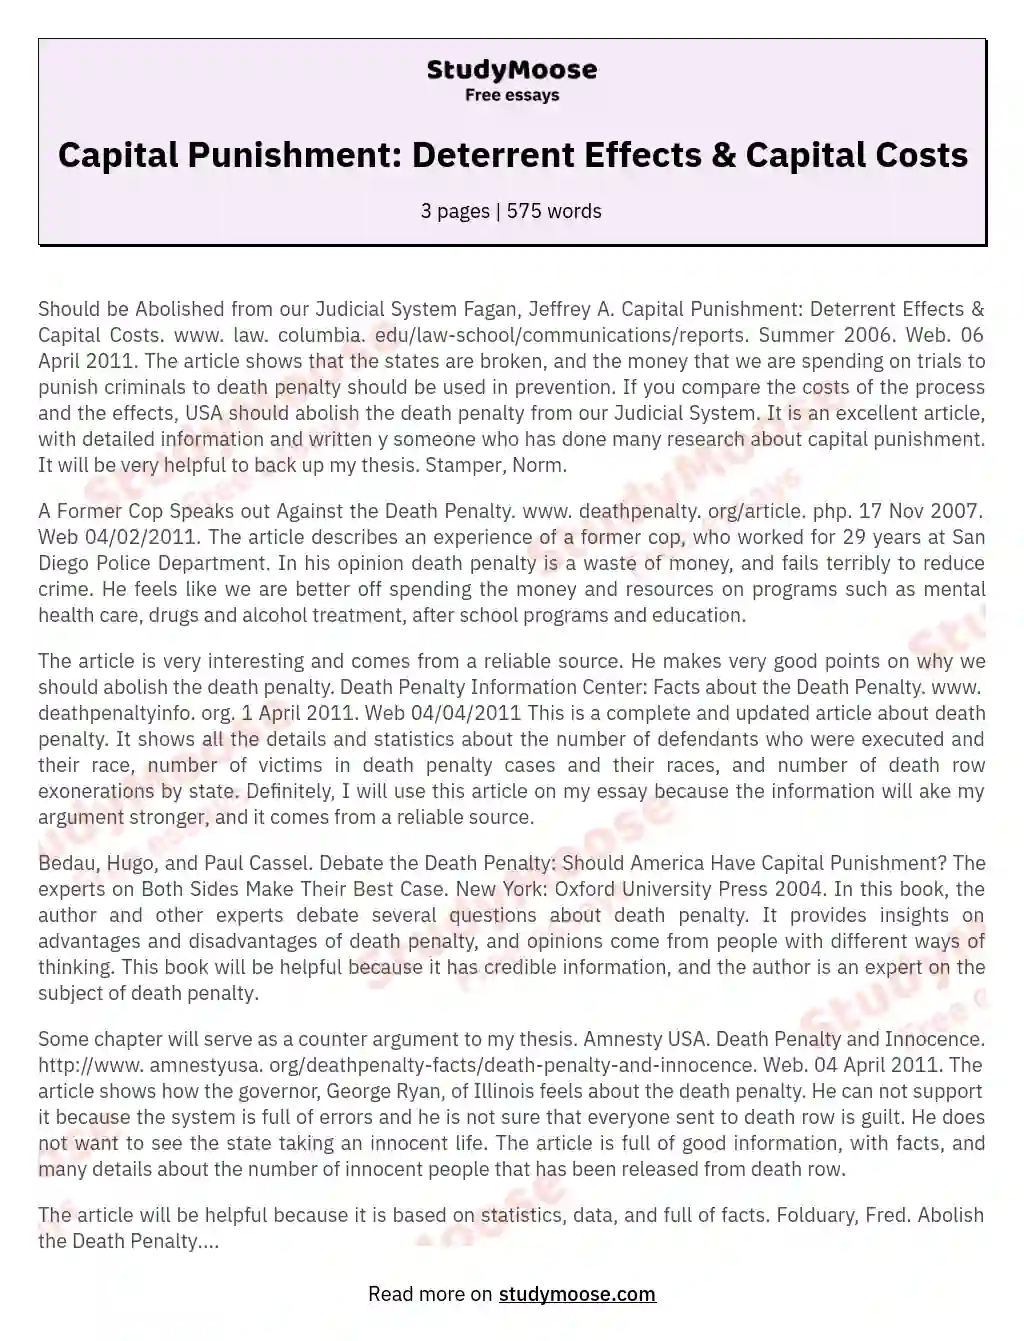 Capital Punishment: Deterrent Effects & Capital Costs essay